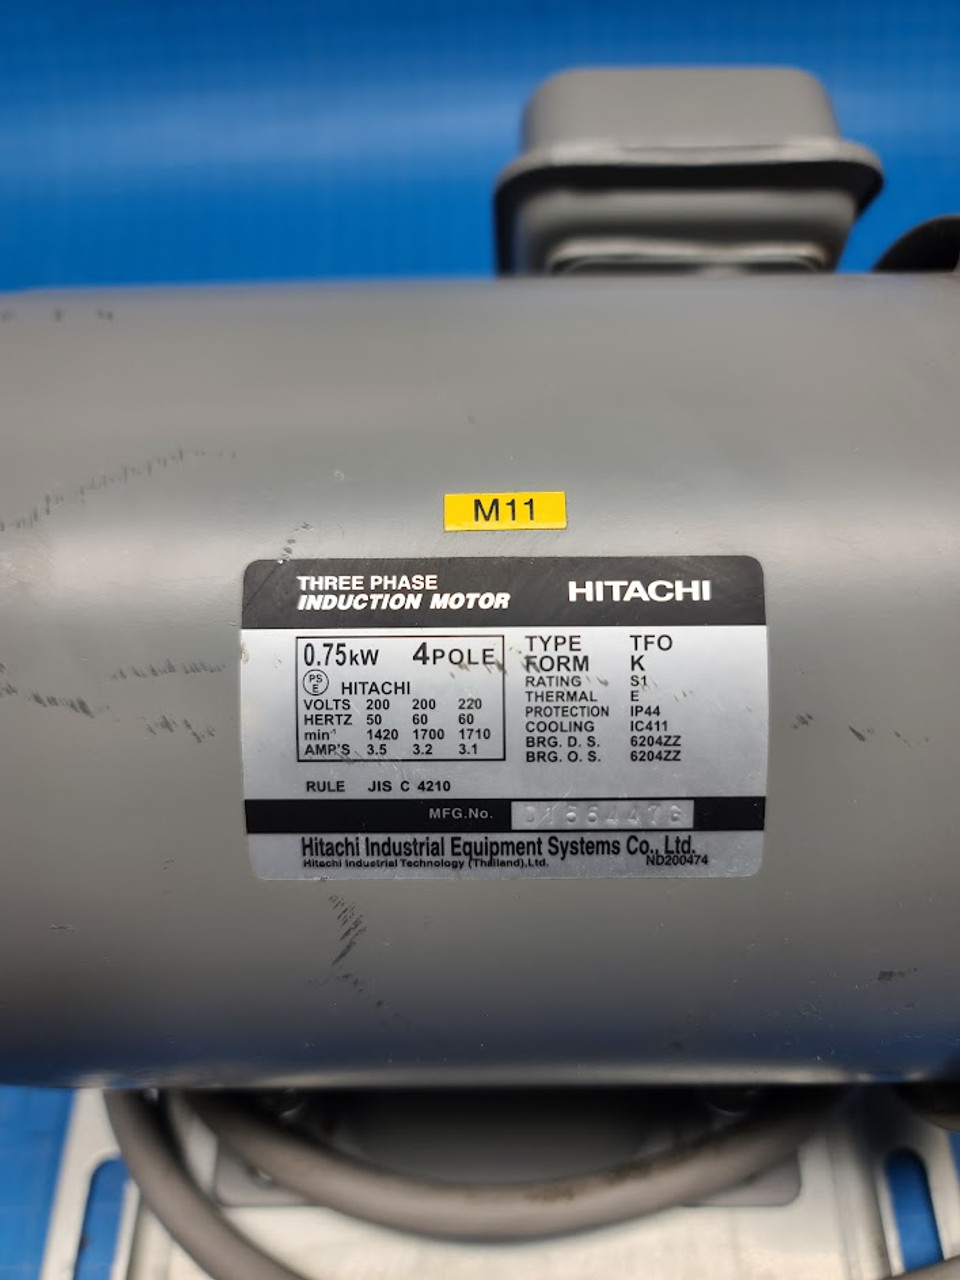 Hitachi 3Ph .75kW 4P 200-220V 3.5-3.1A Induction Motor